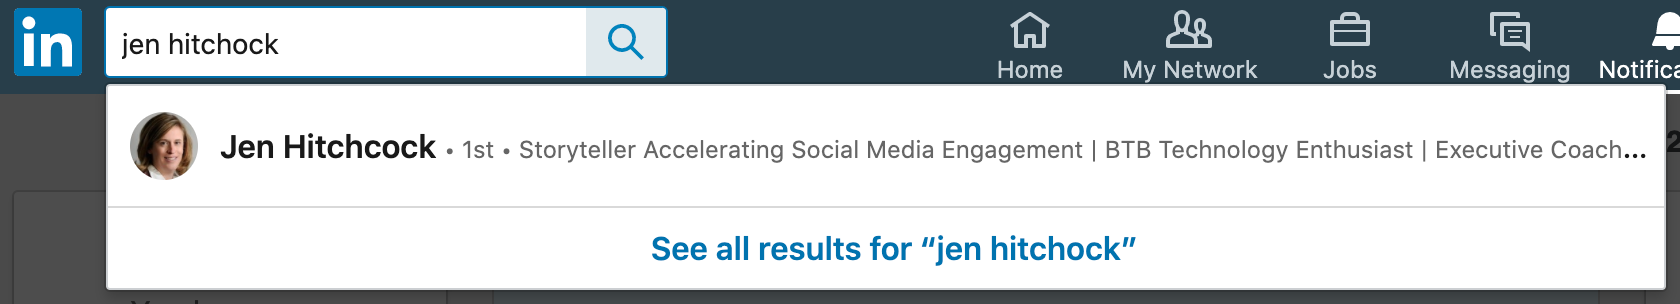 LinkedIn headline search